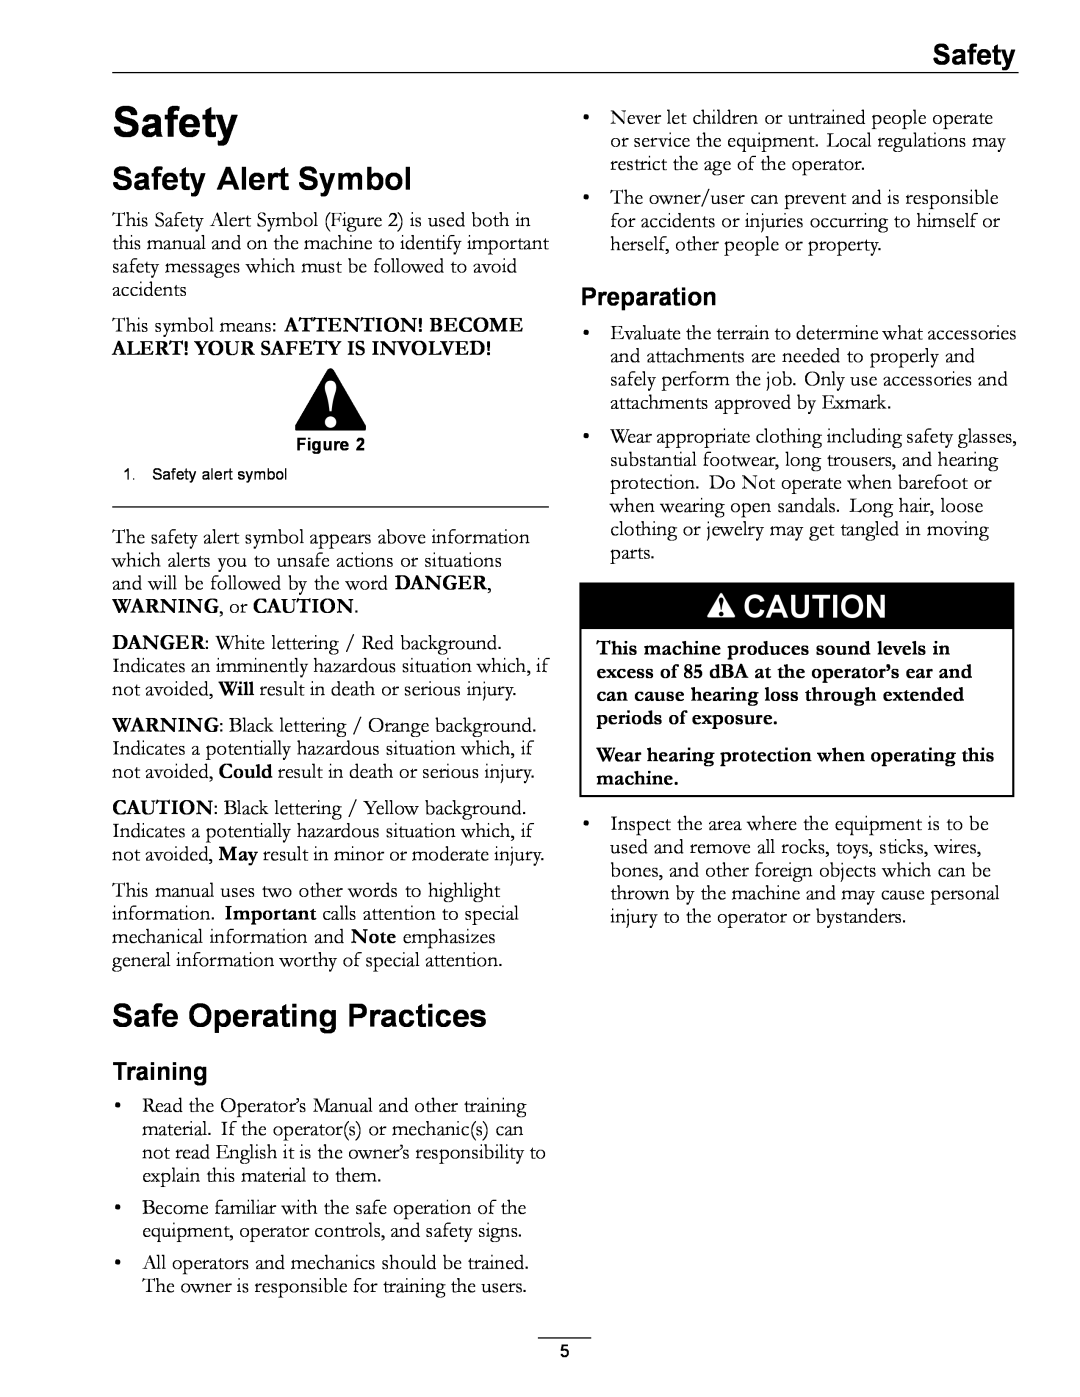 Exmark TT23KAE Safety Alert Symbol, Safe Operating Practices, Training, Preparation, Alert! Your Safety Is Involved 